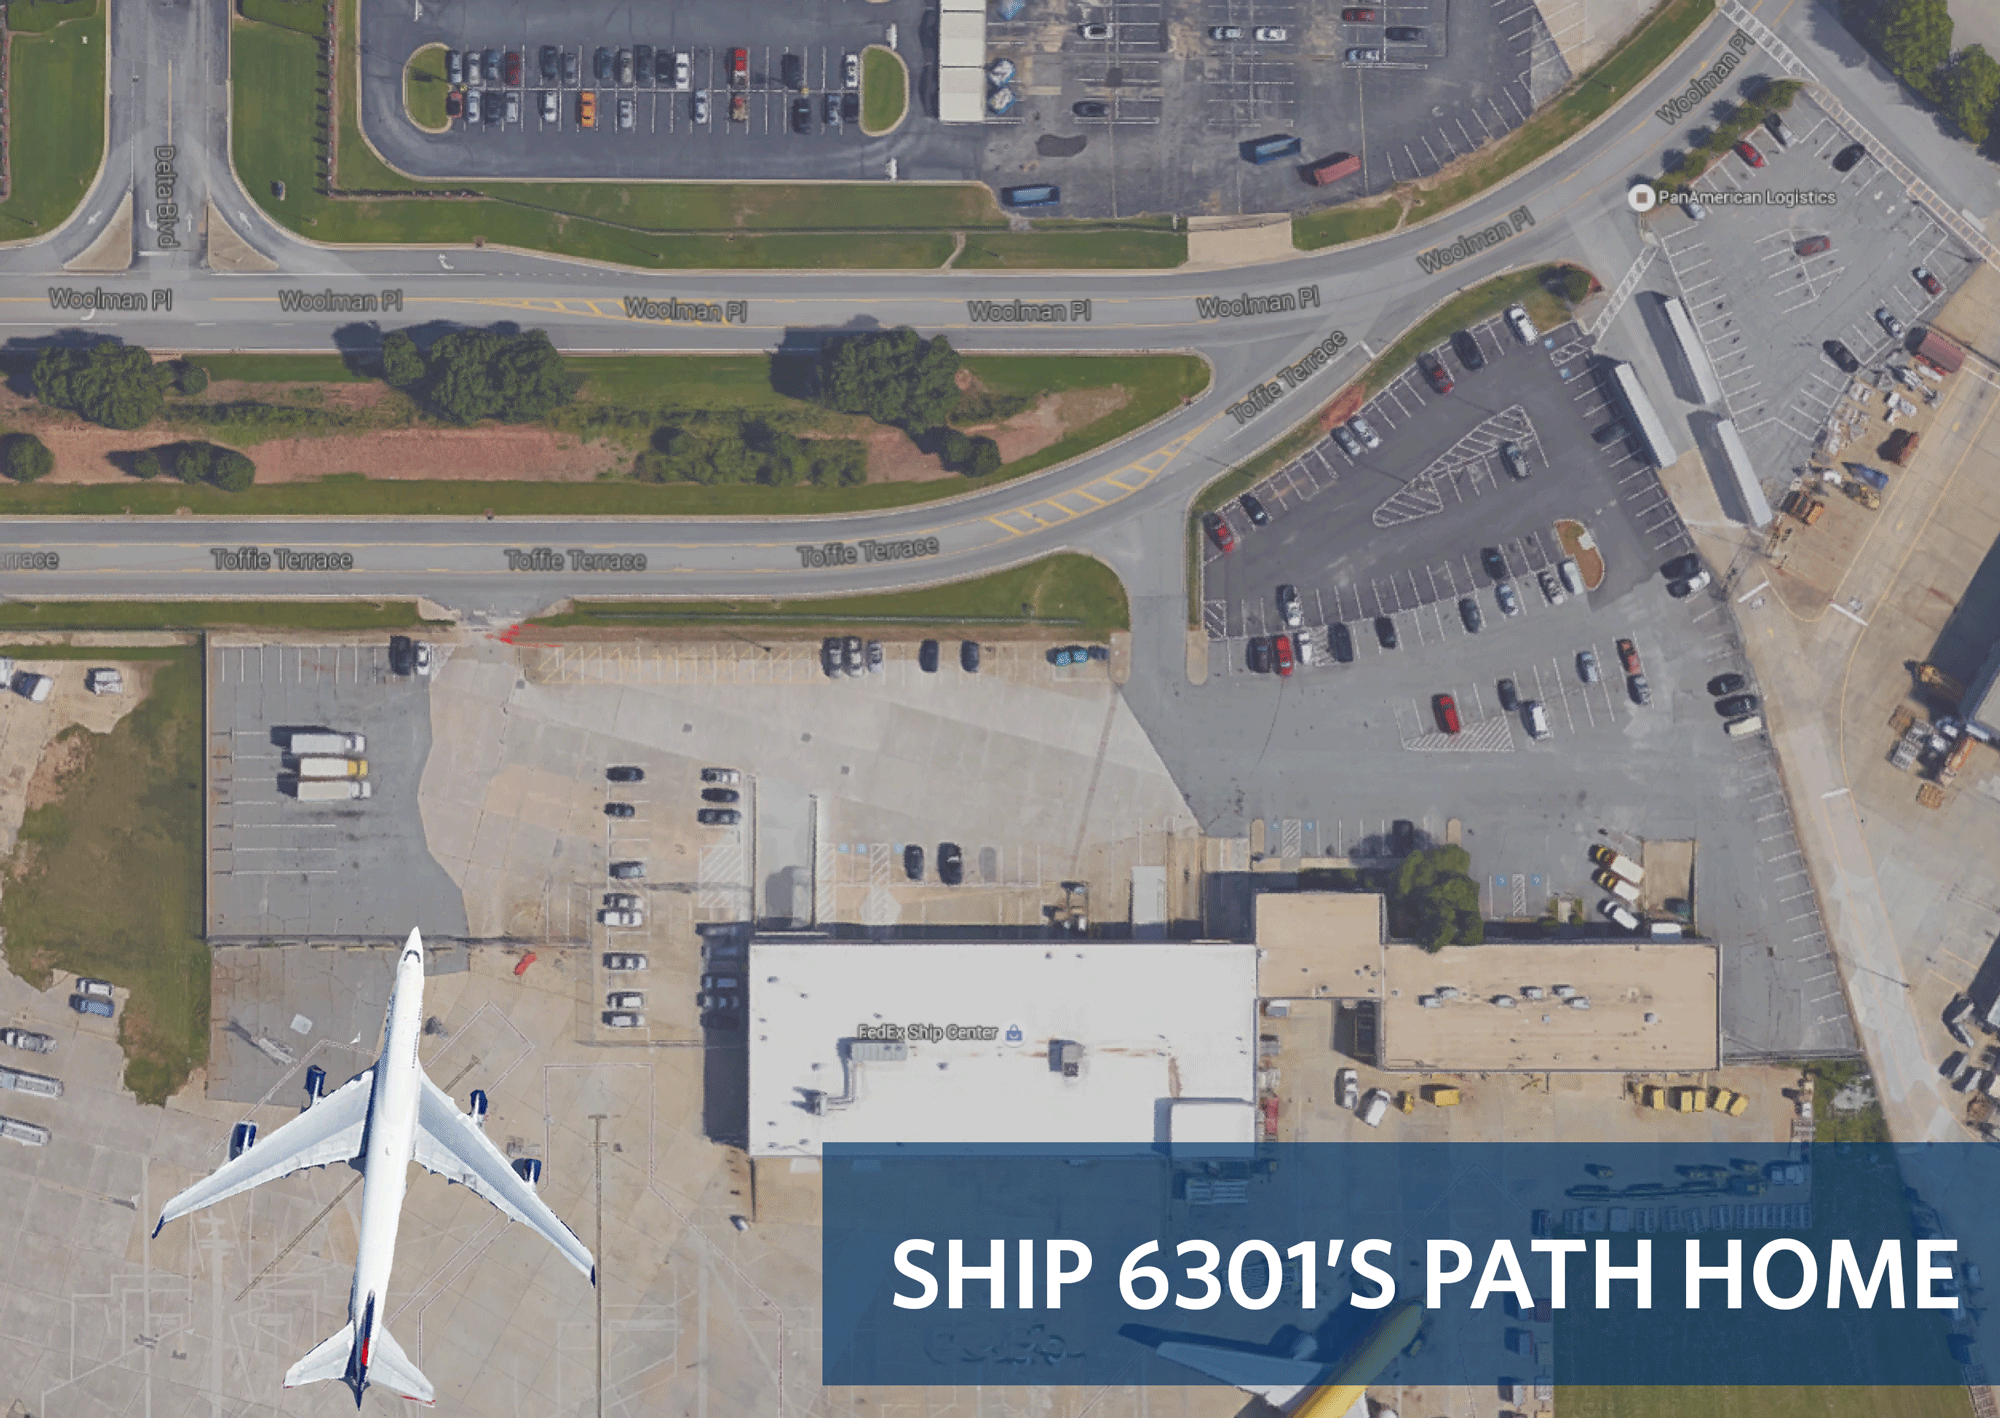 Ship 6031's path home